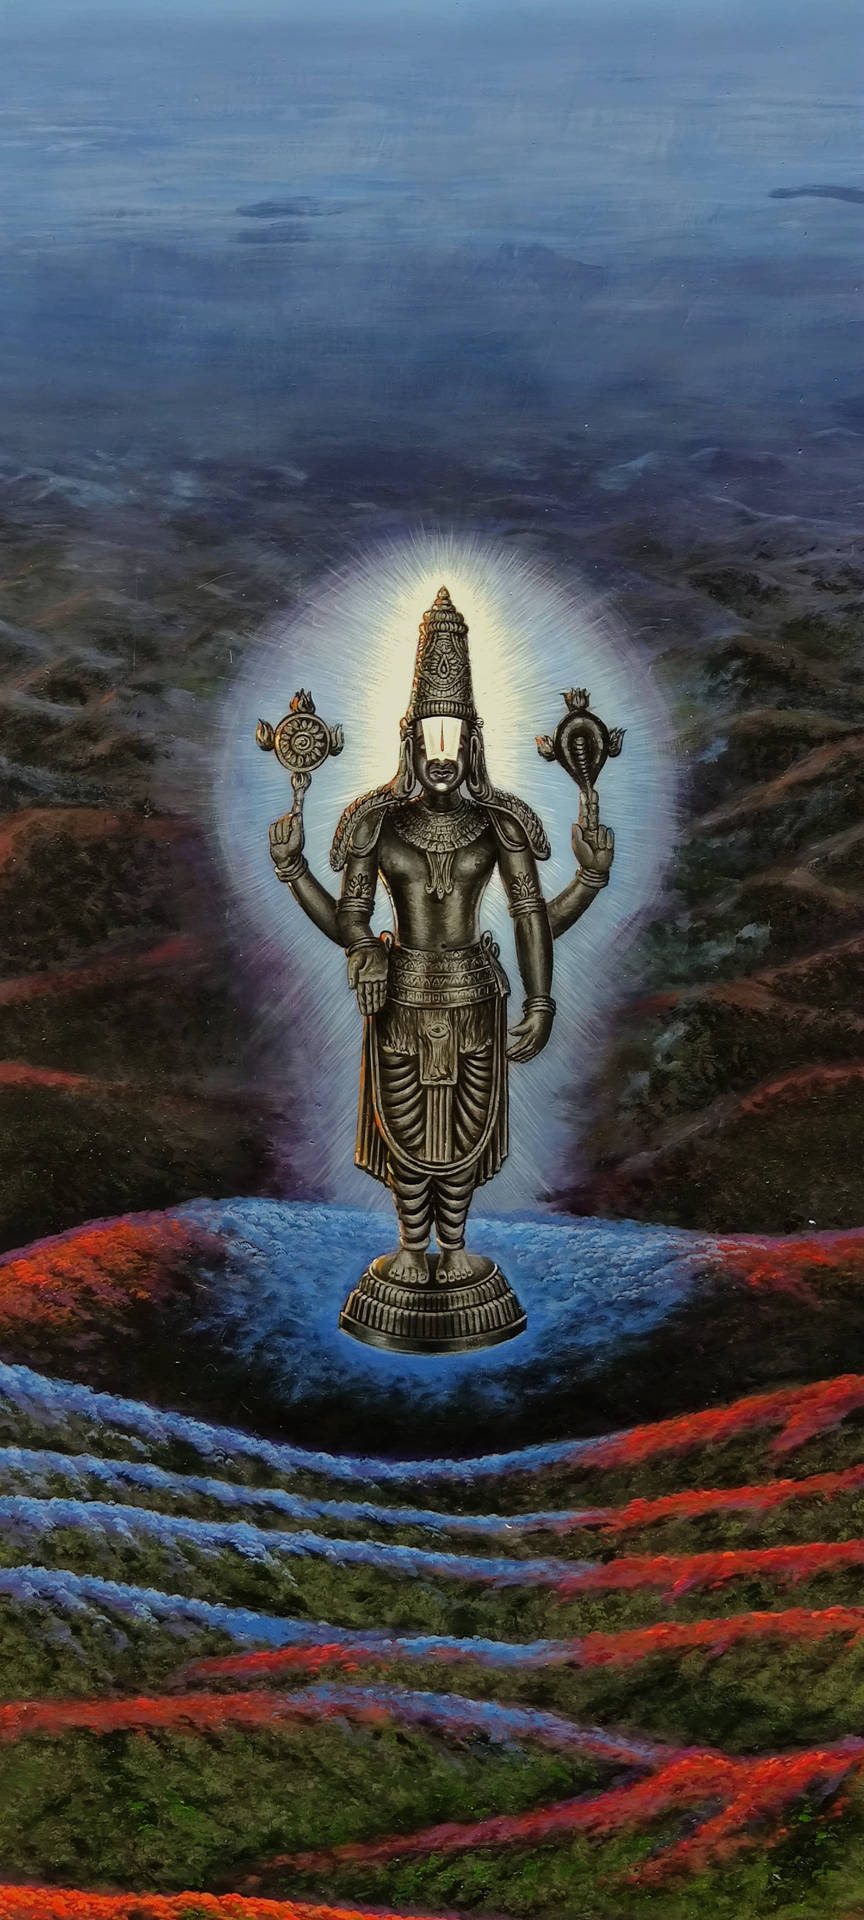 Venkateswara Swamy Black Metallic Deity Figurine